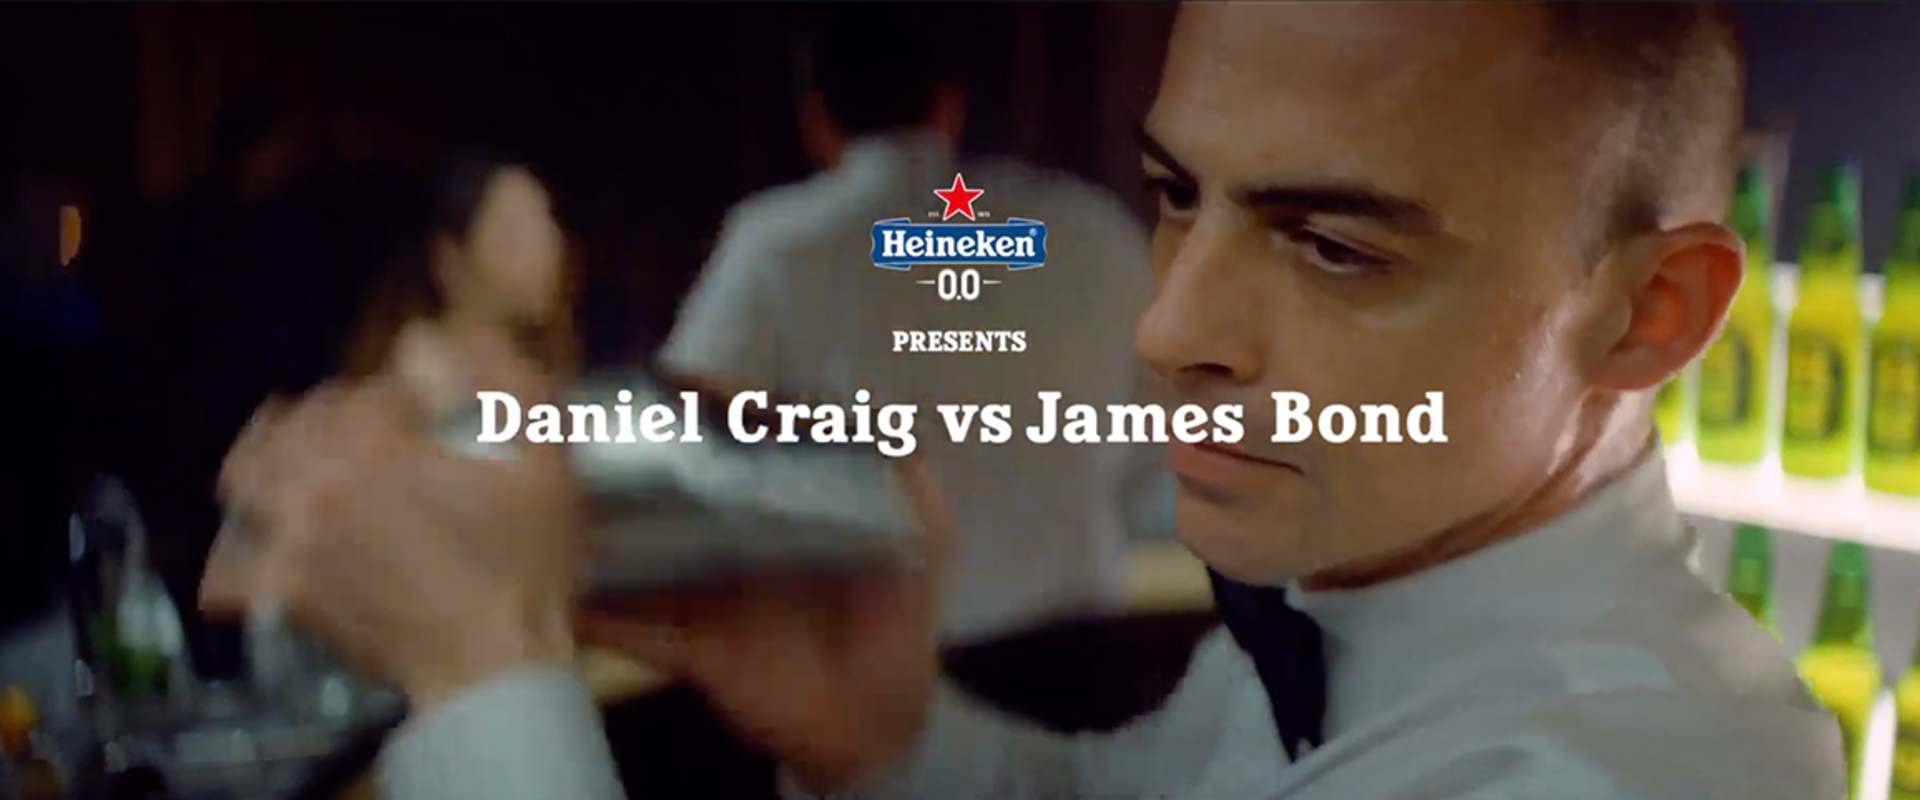 Daniel Craig vs James Bond background 2